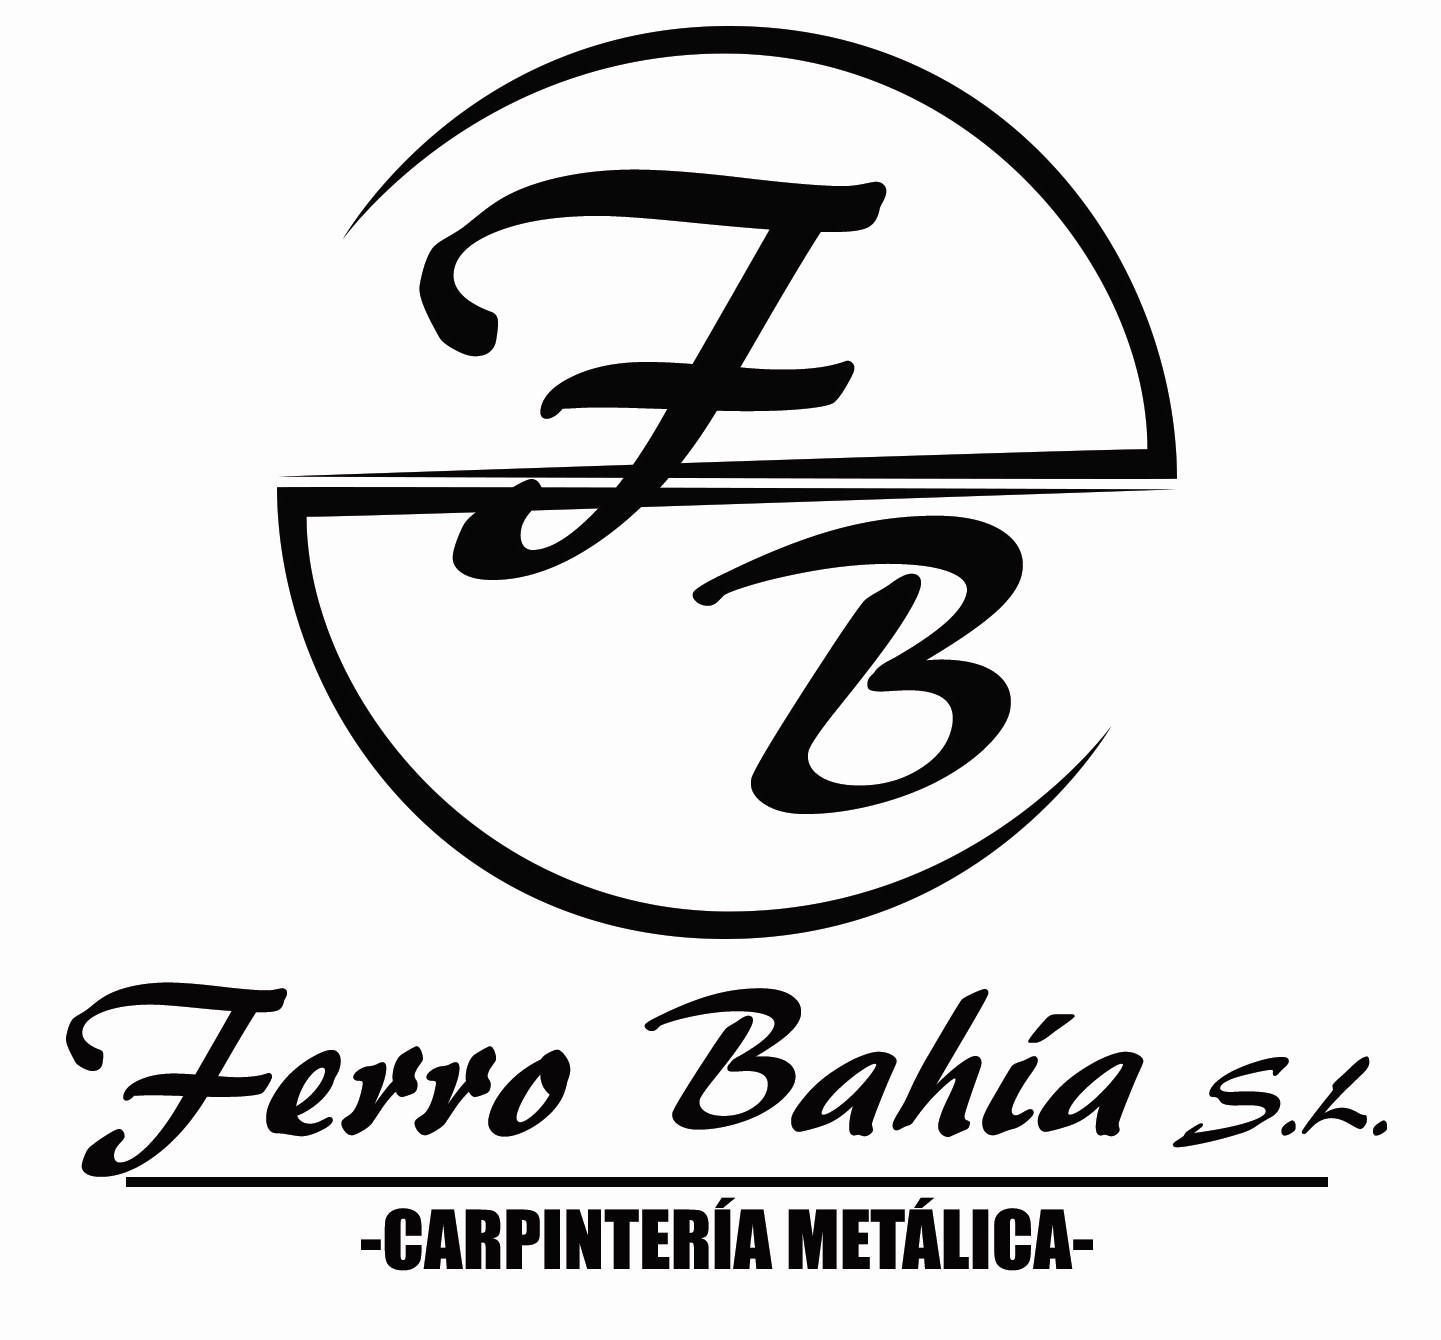 CARPINTERIA METALICA FERRO BAHIA, S.L.